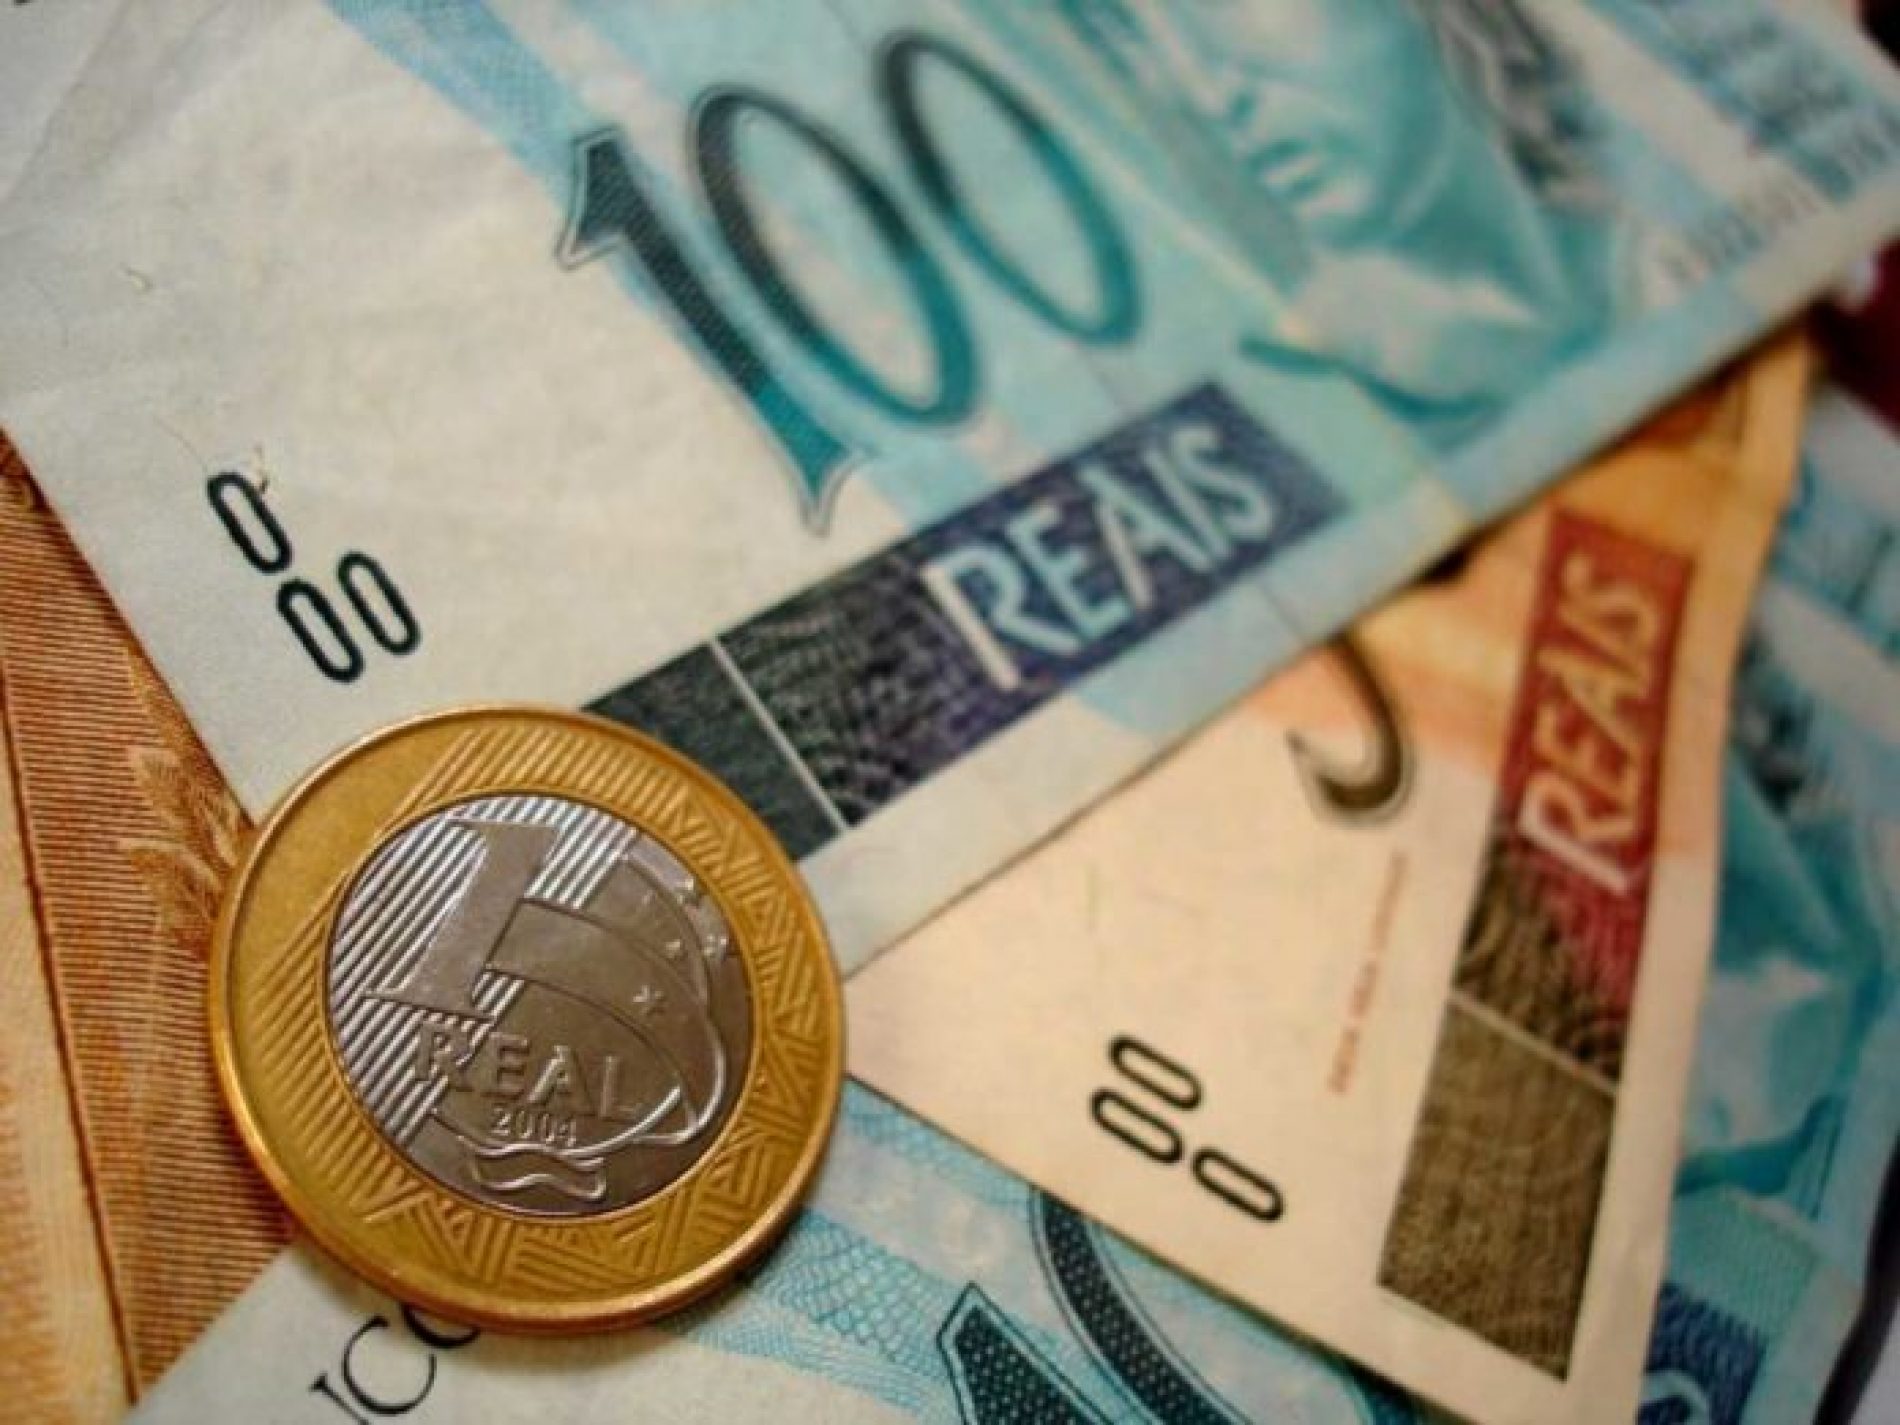 MIRASSOL: Polícia investiga tentativa de estelionato de R$71 mil